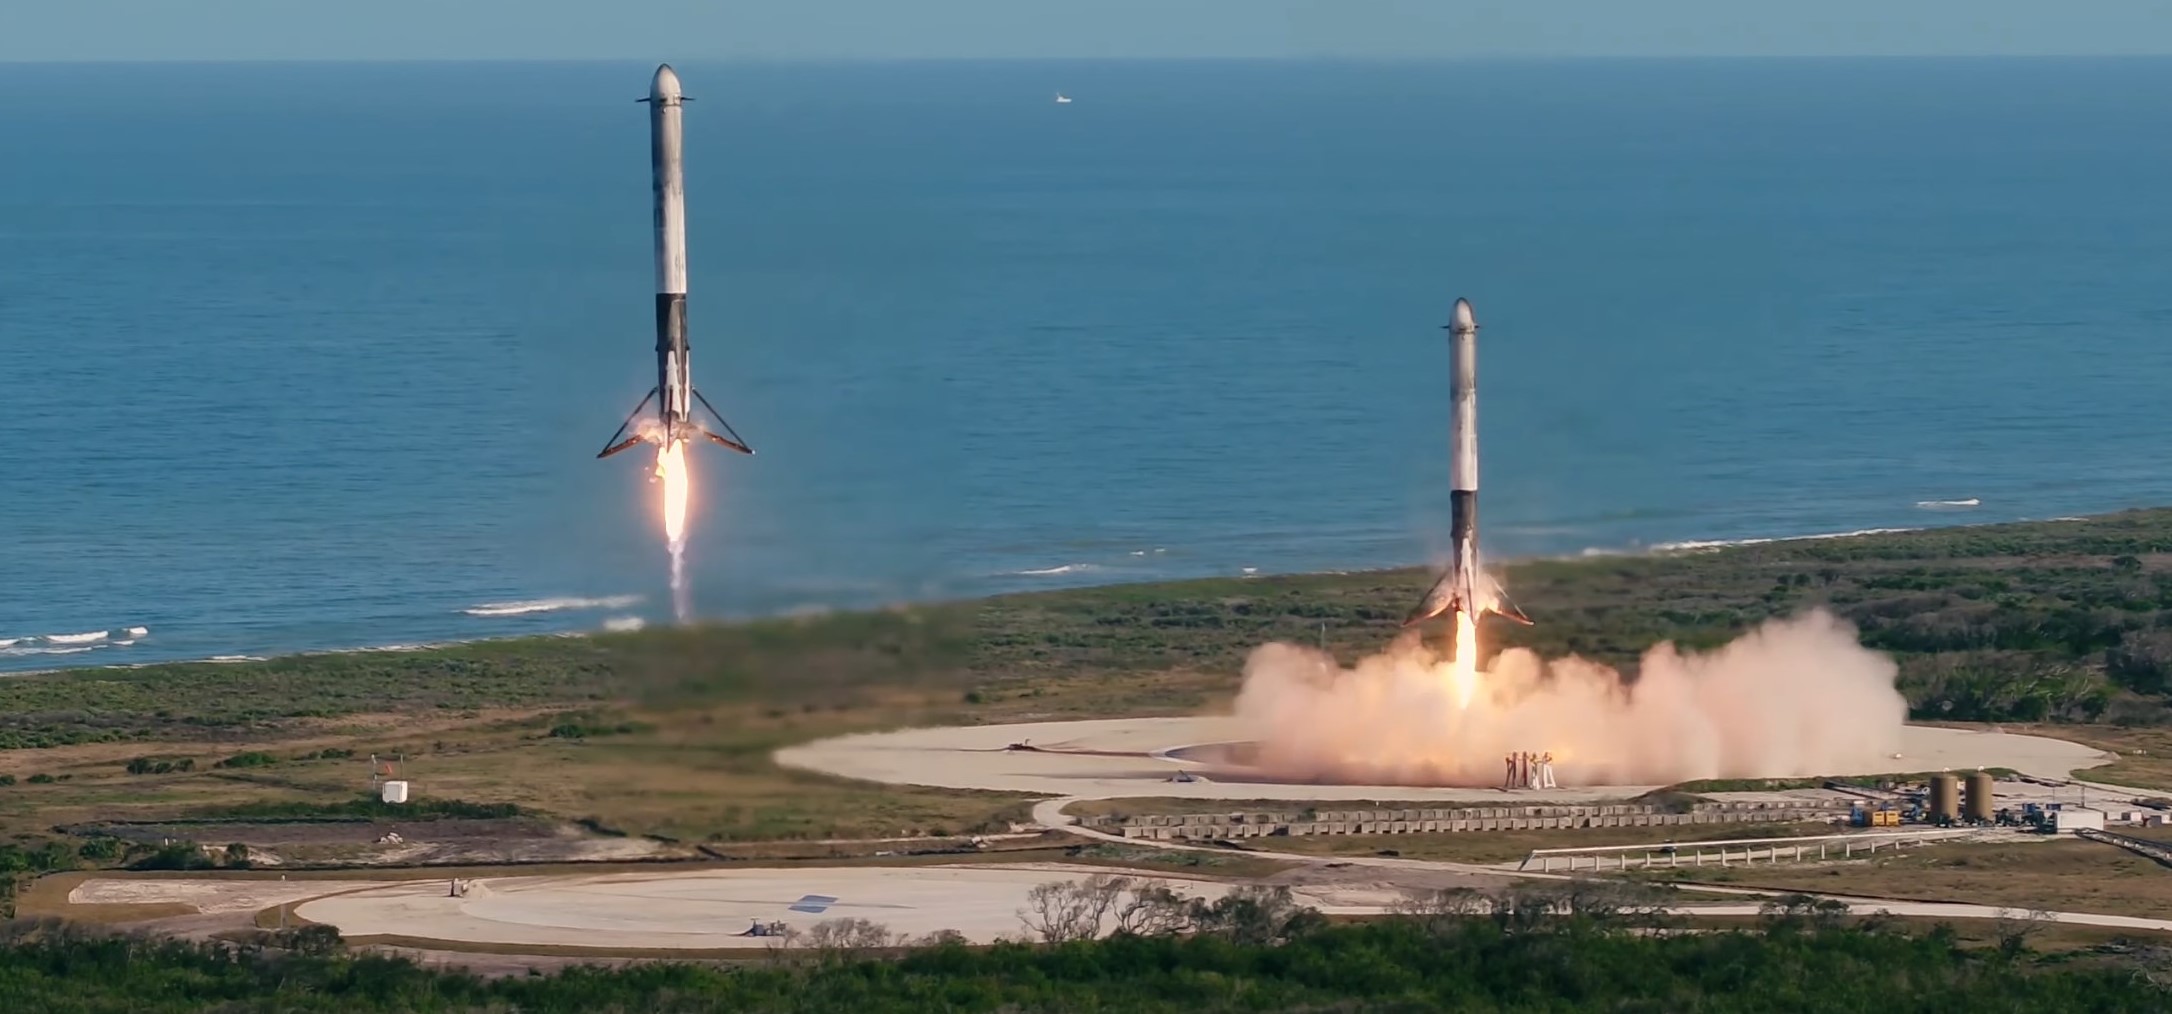 Falcon Heavy Demo Feb 2018 SpaceX 1 crop